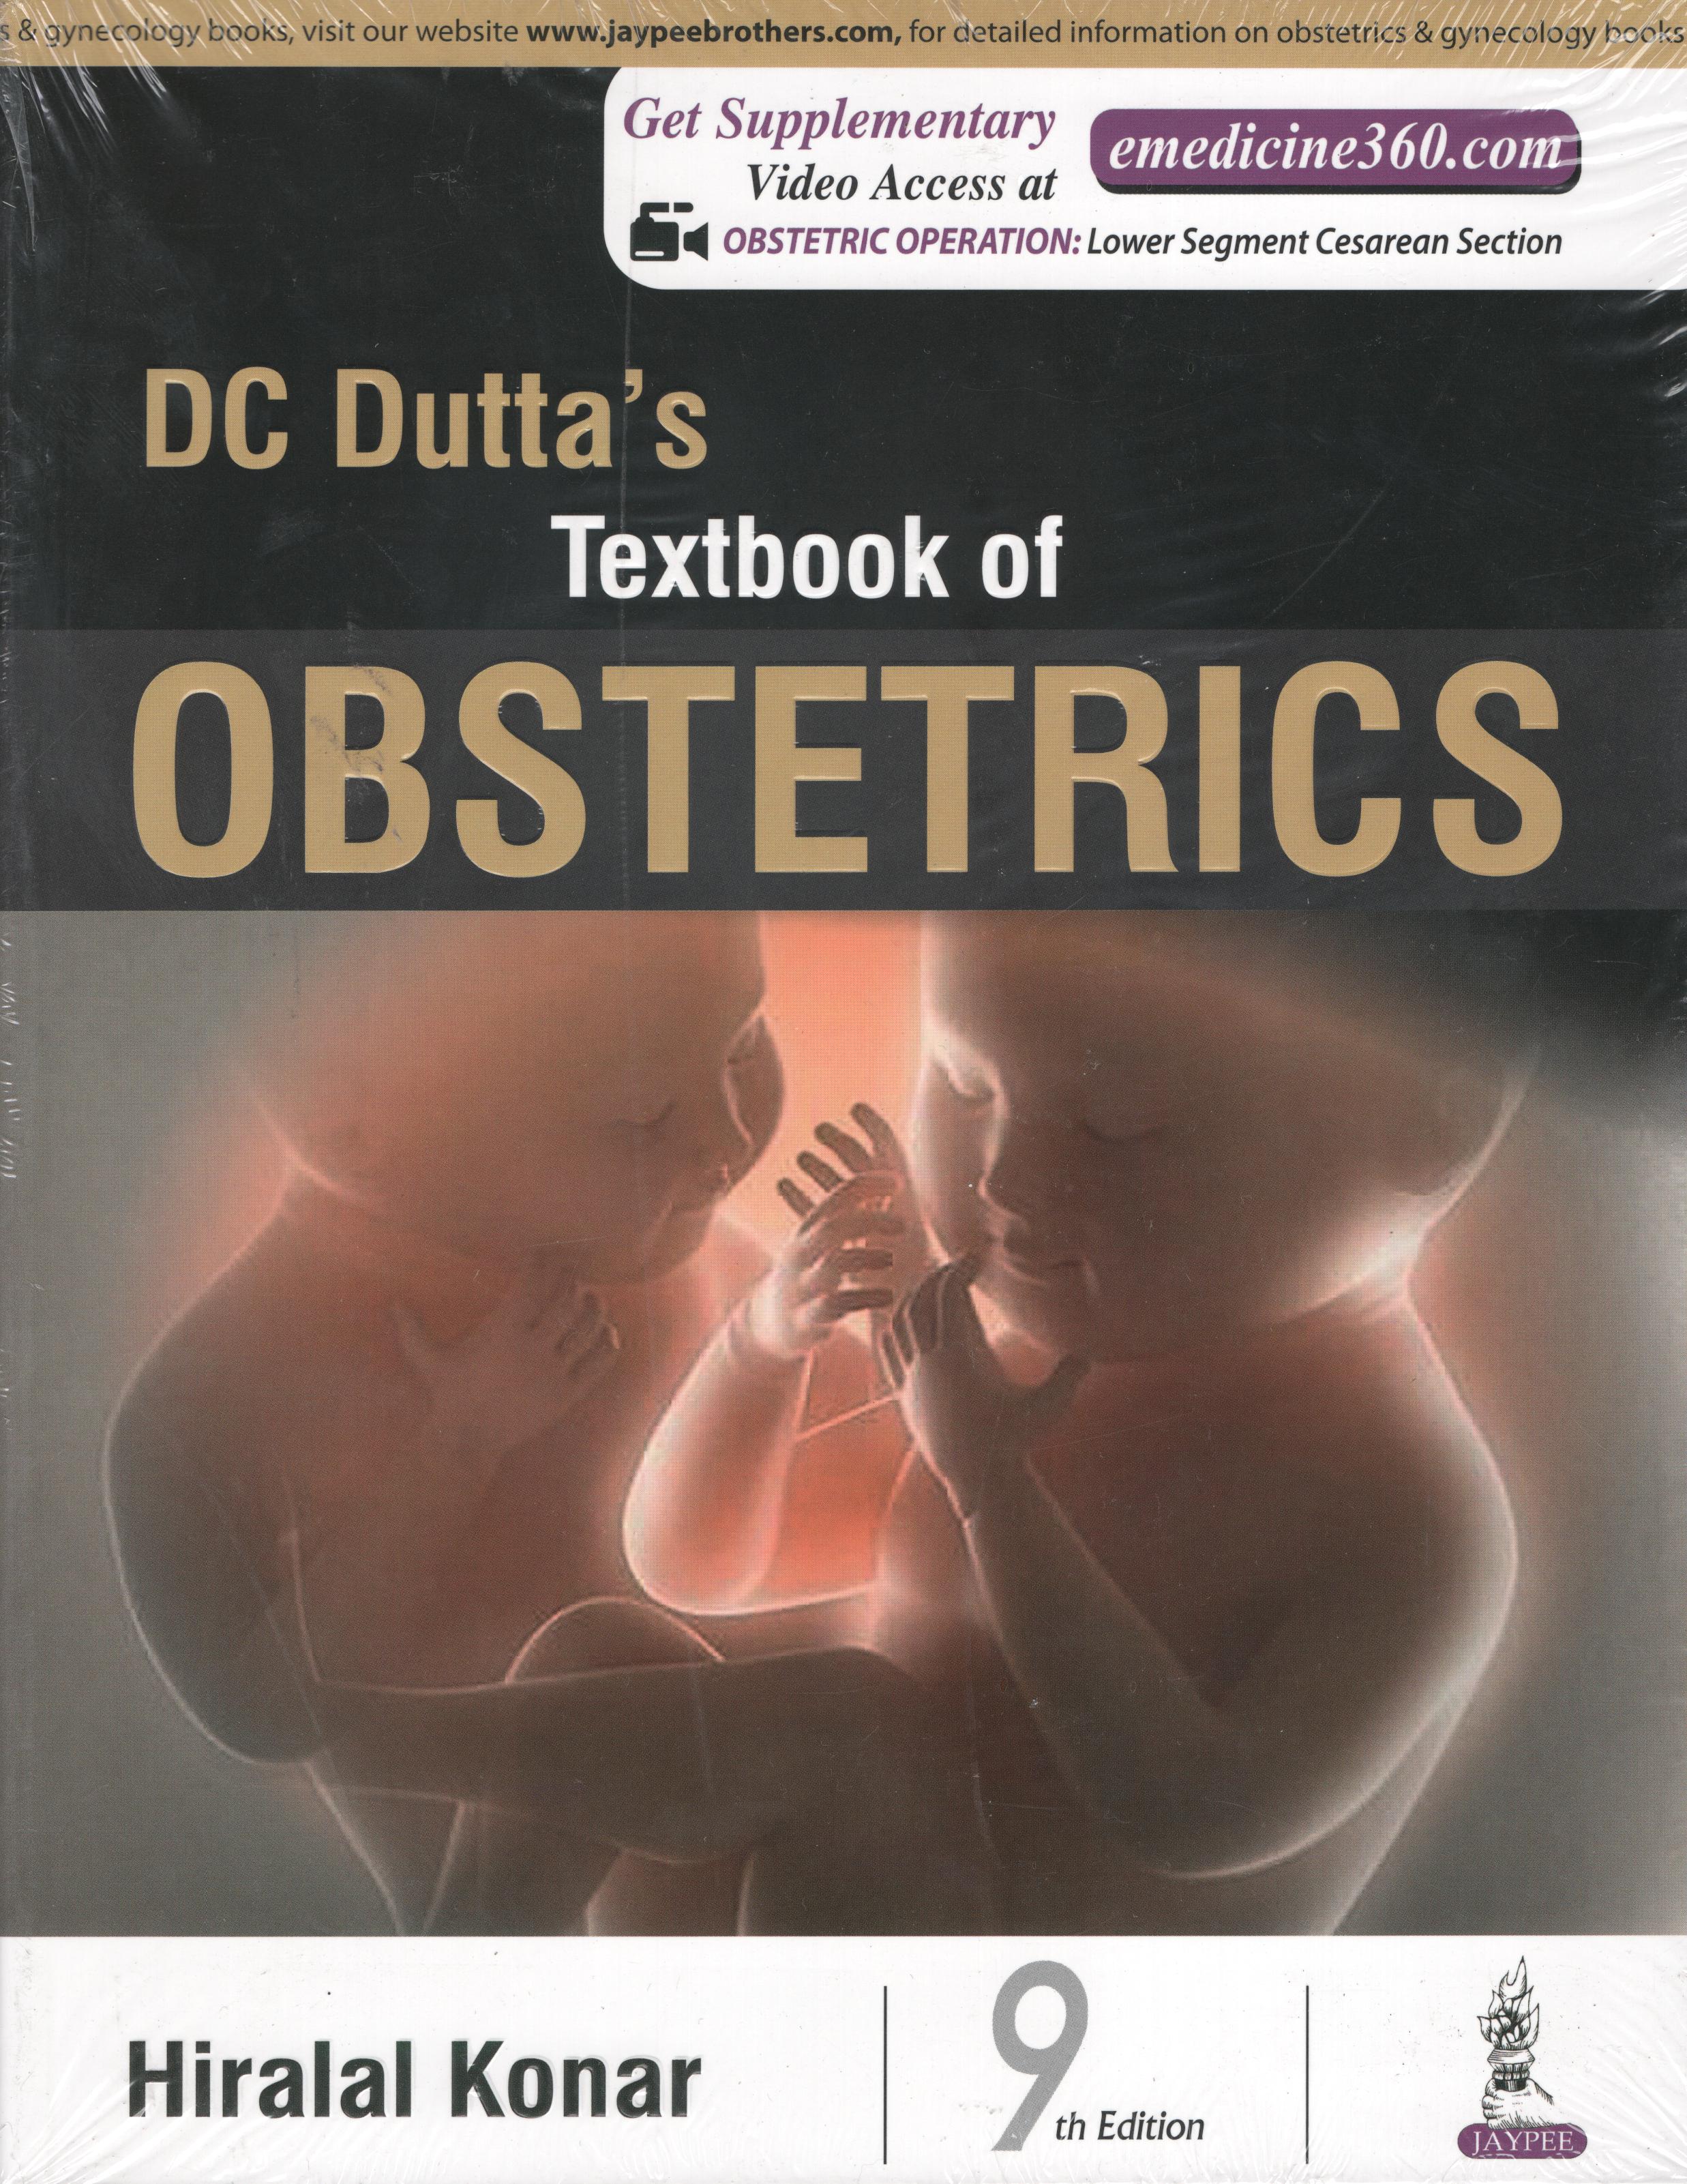 DC DUTTAS TEXTBOOK OF OBSTETRICS - JAYPEE